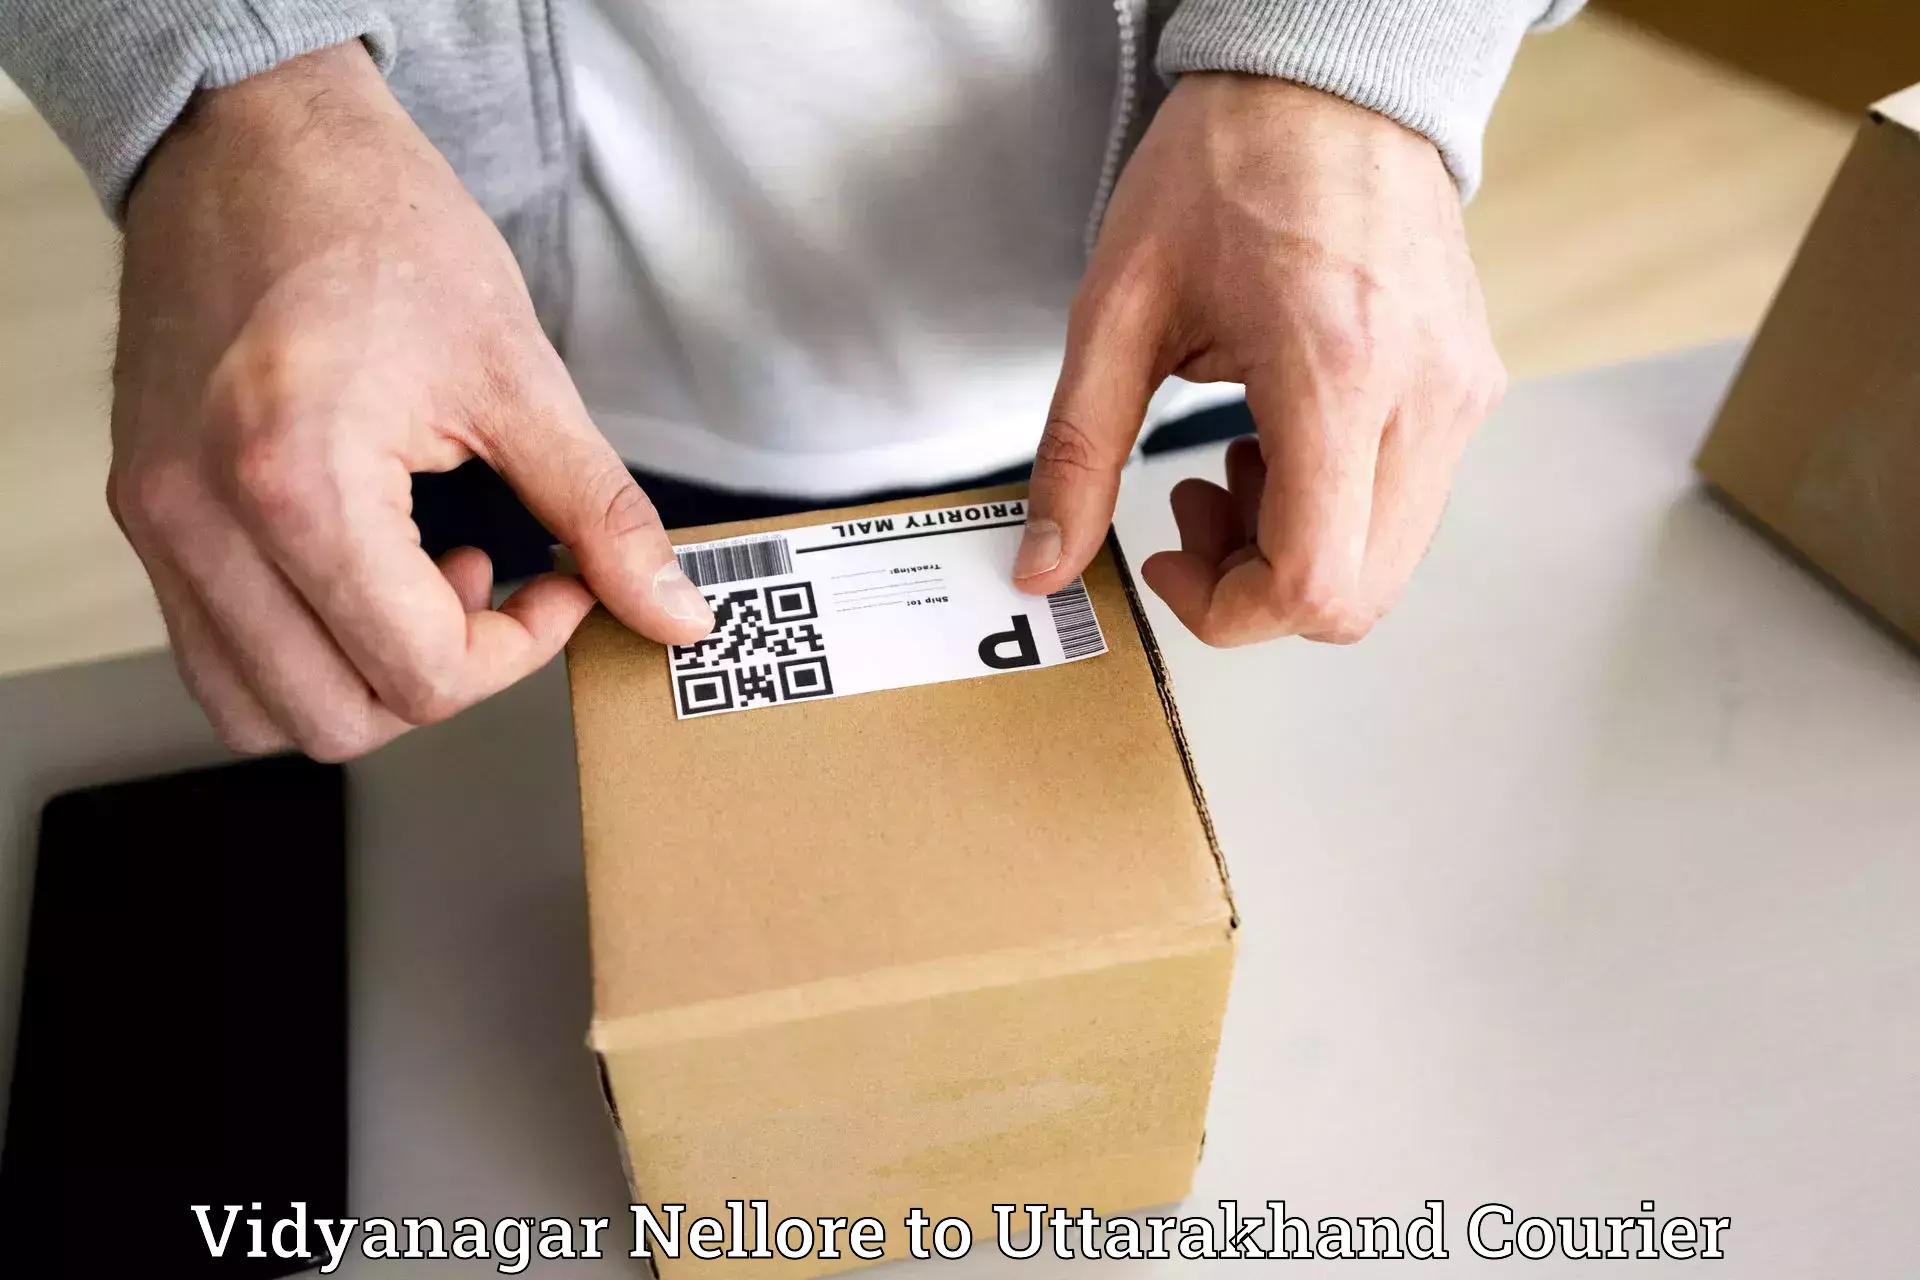 Courier service innovation Vidyanagar Nellore to Herbertpur